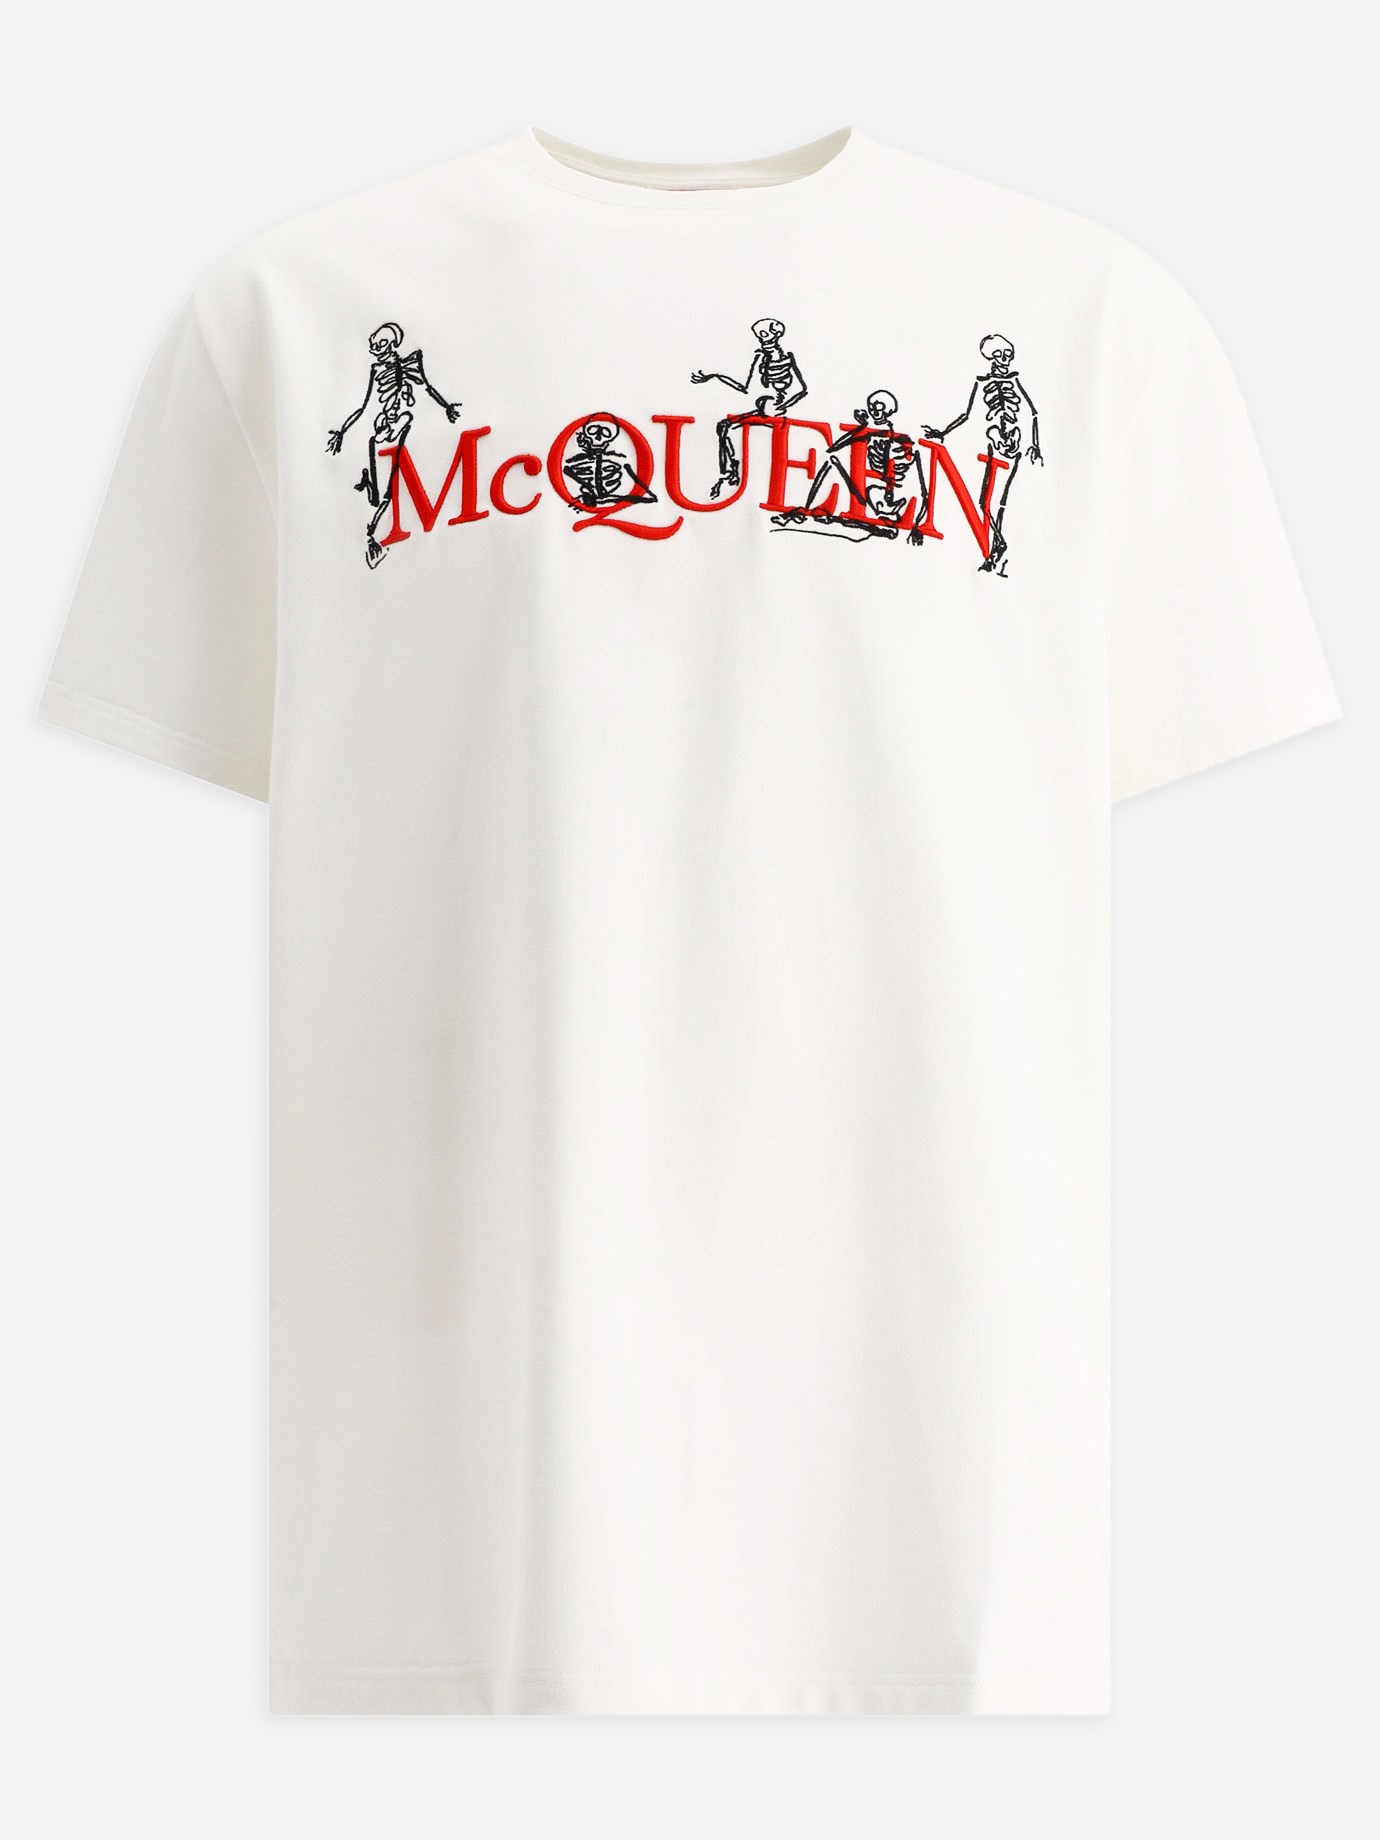  Skeletons  t-shirtby Alexander McQueen - 3